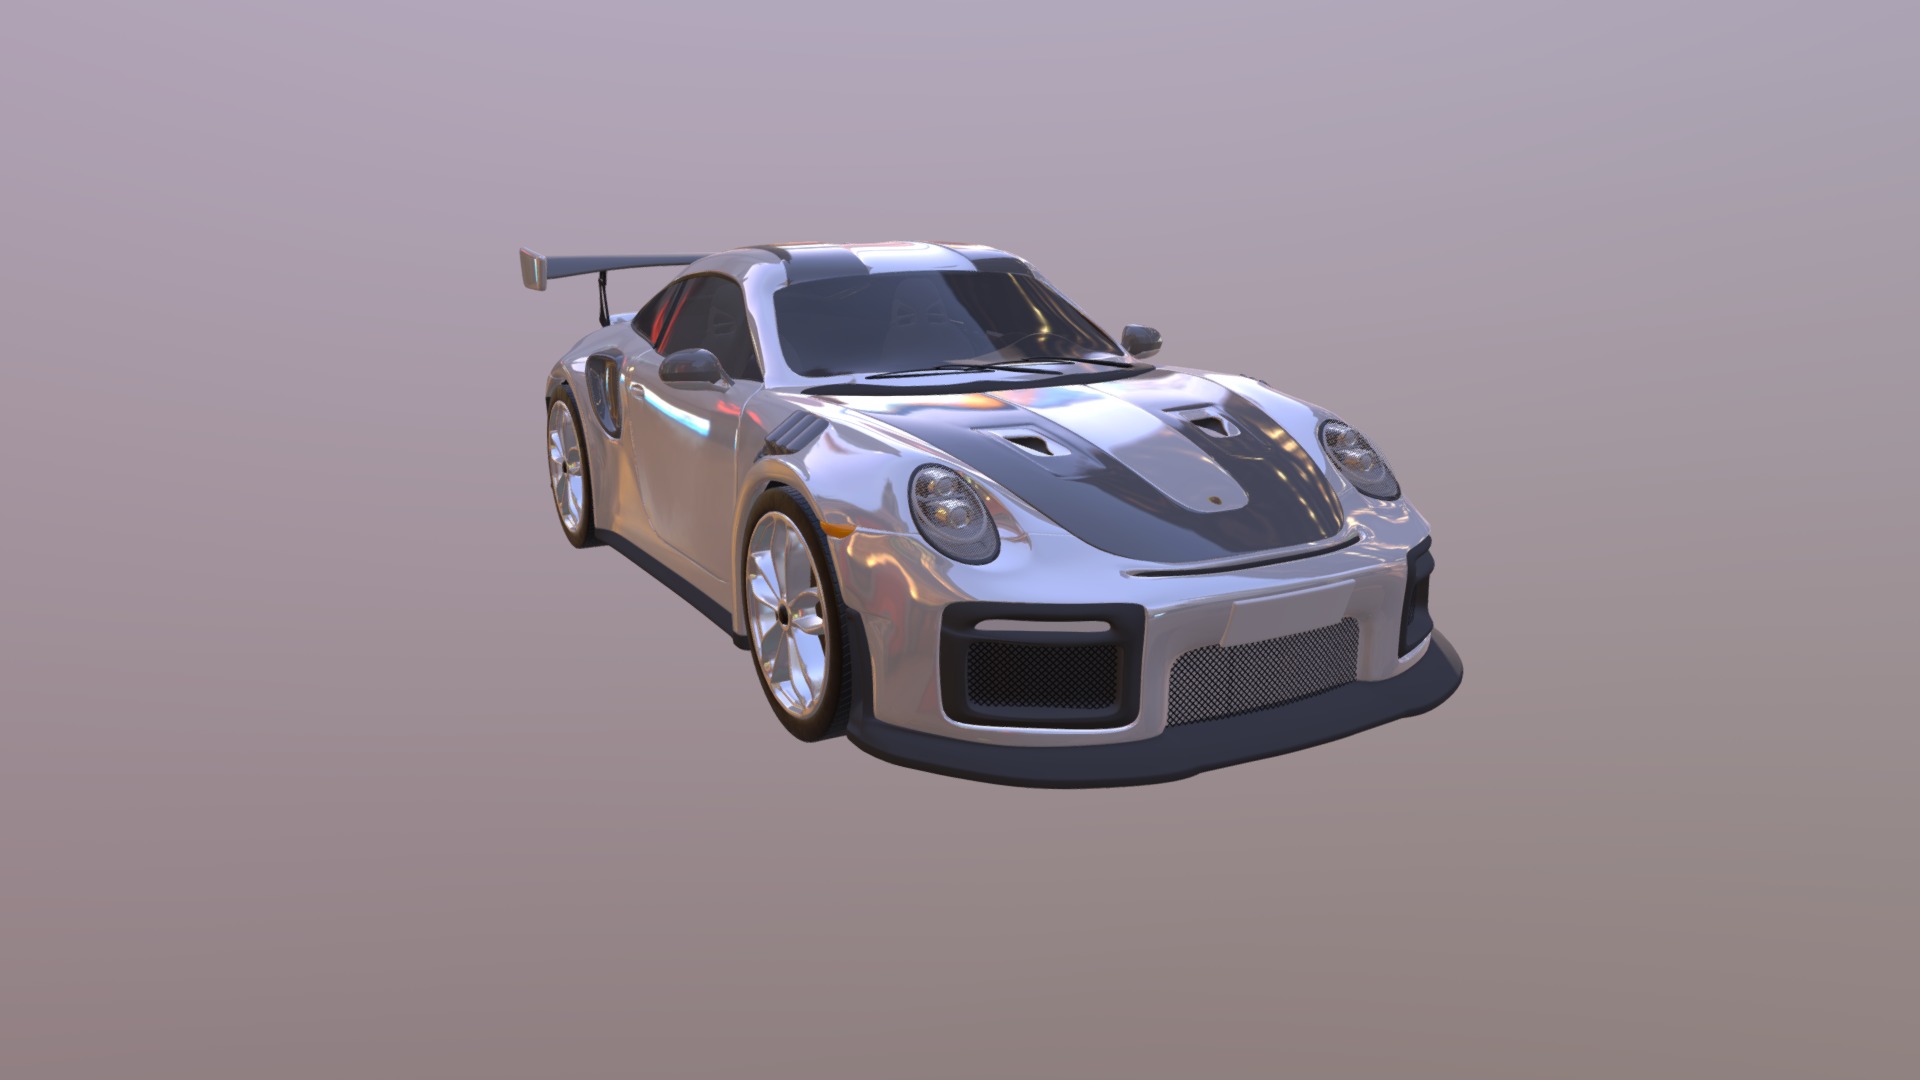 3D model Porsche 911 gt2 rs - This is a 3D model of the Porsche 911 gt2 rs. The 3D model is about a silver sports car.